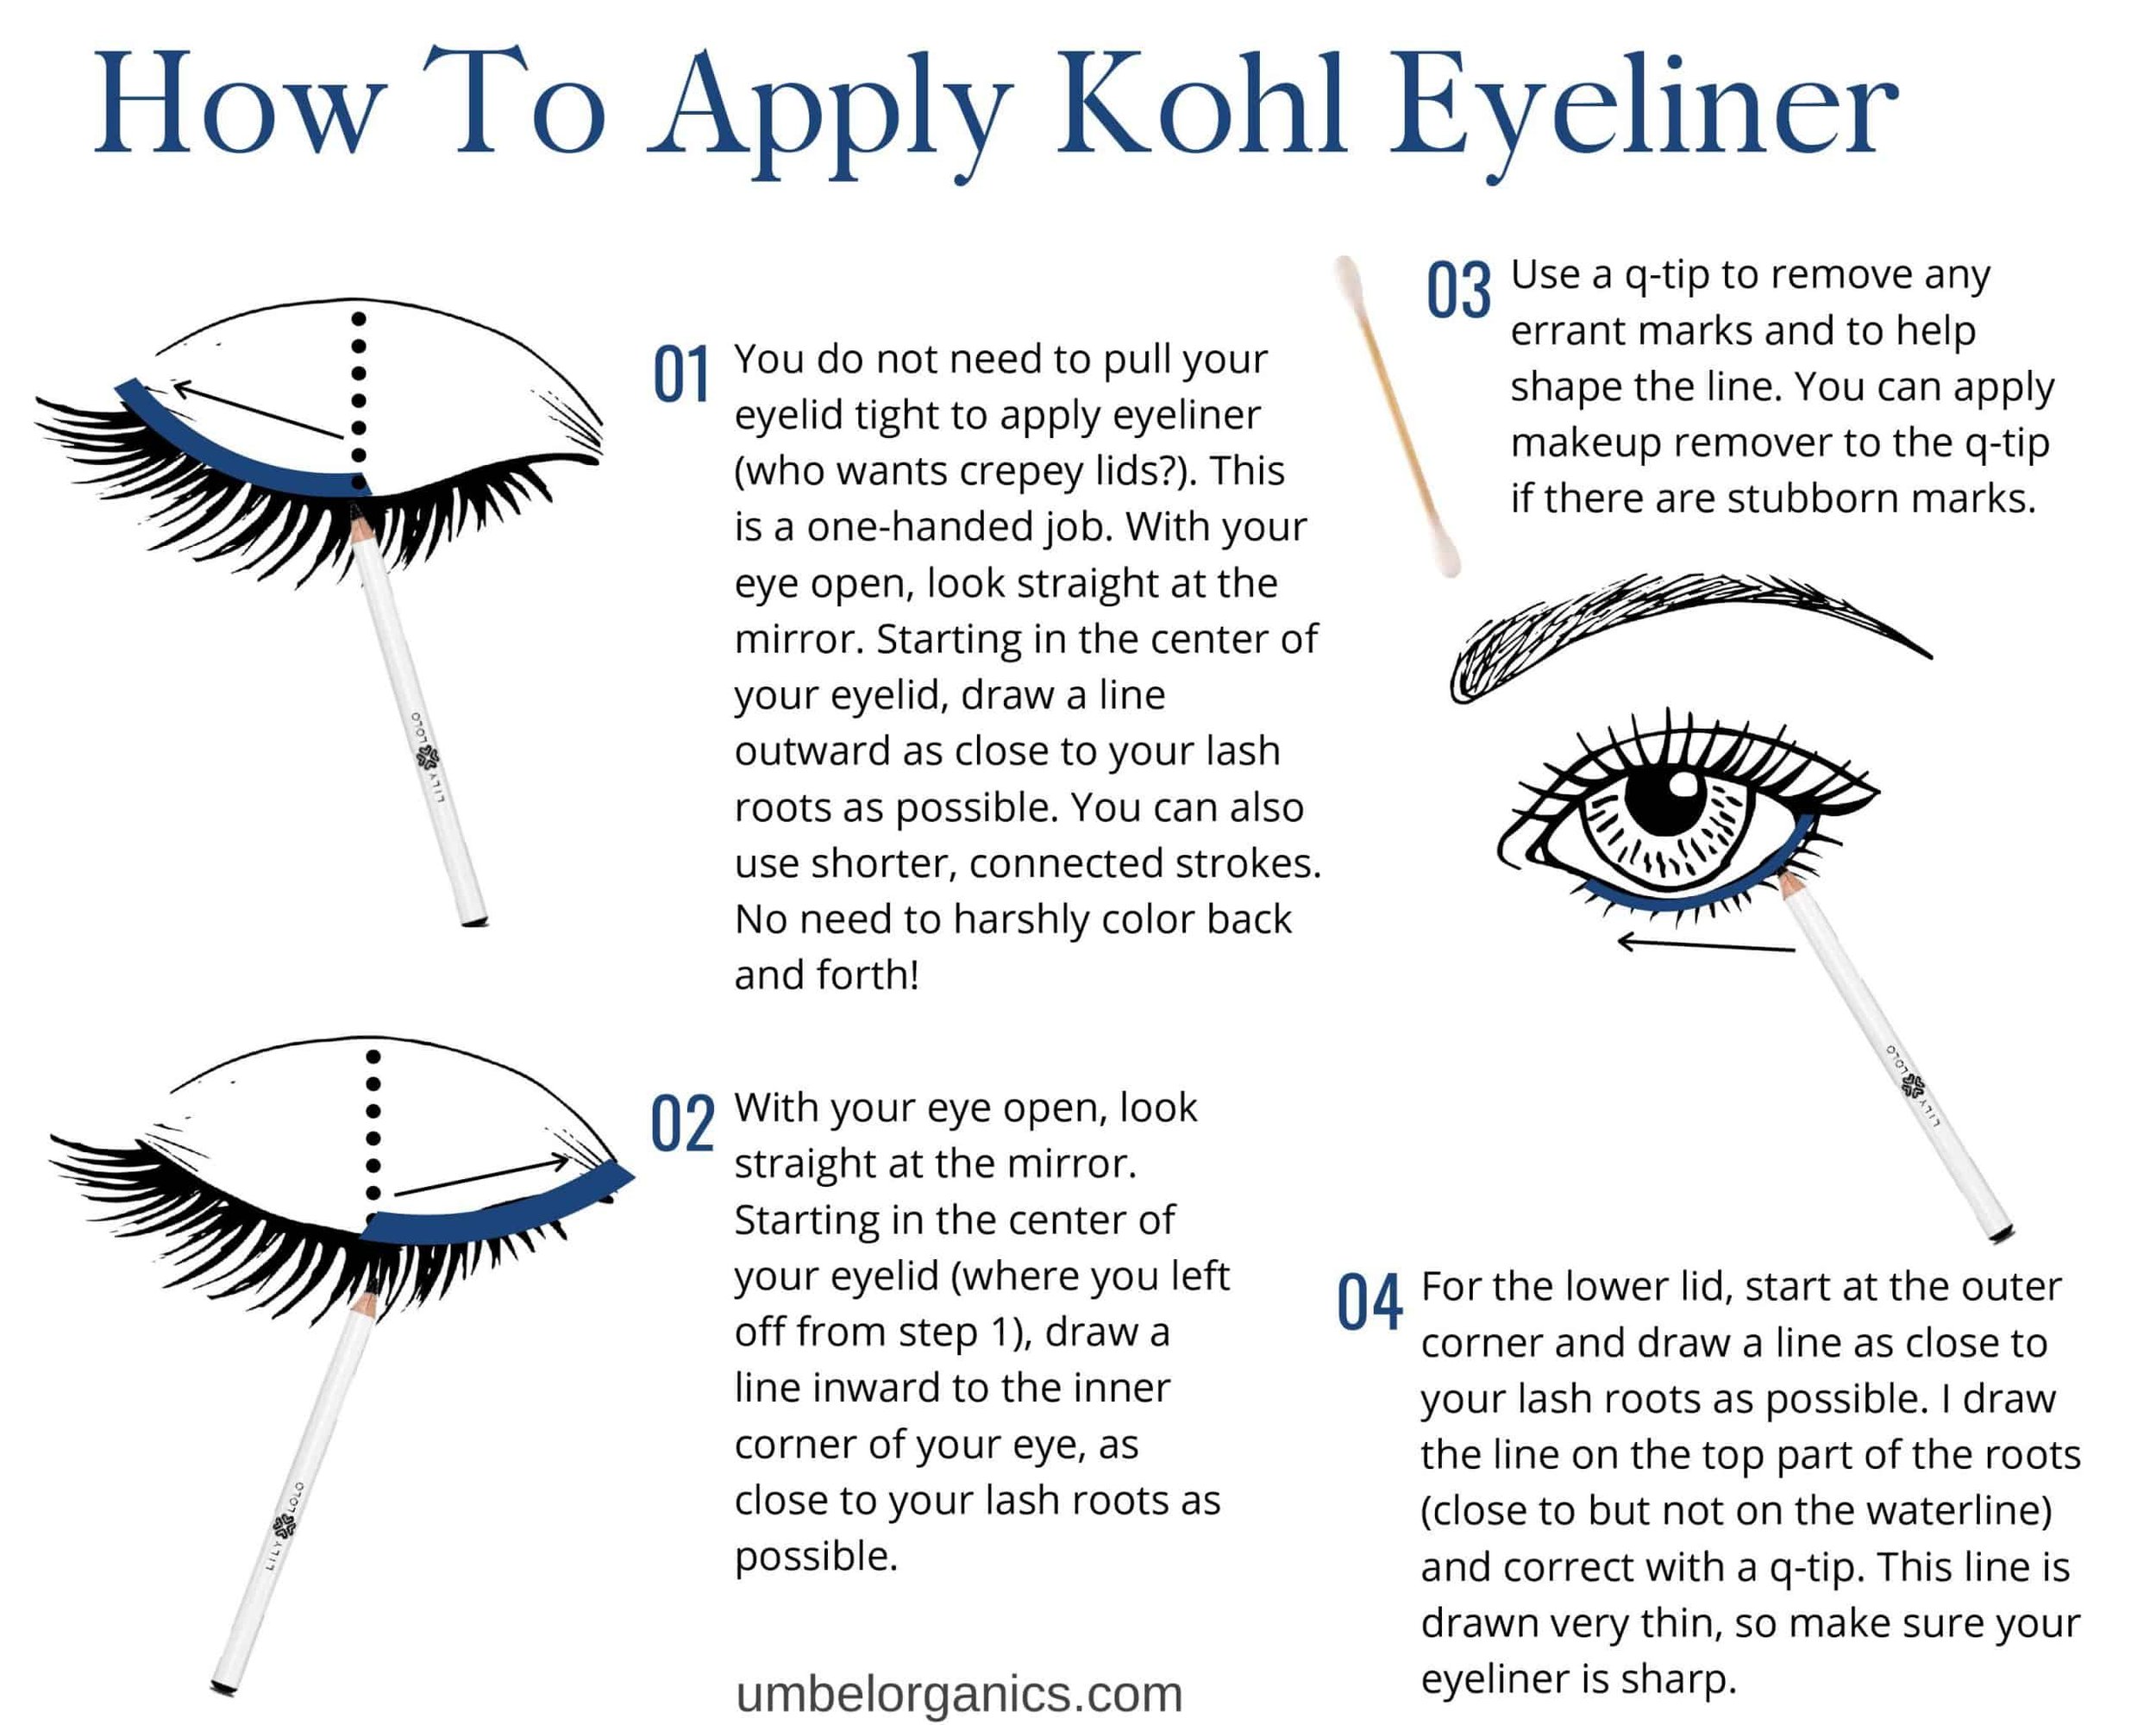 how-to-apply-kohl-eyeliner-umbel-organics-scaled.jpg